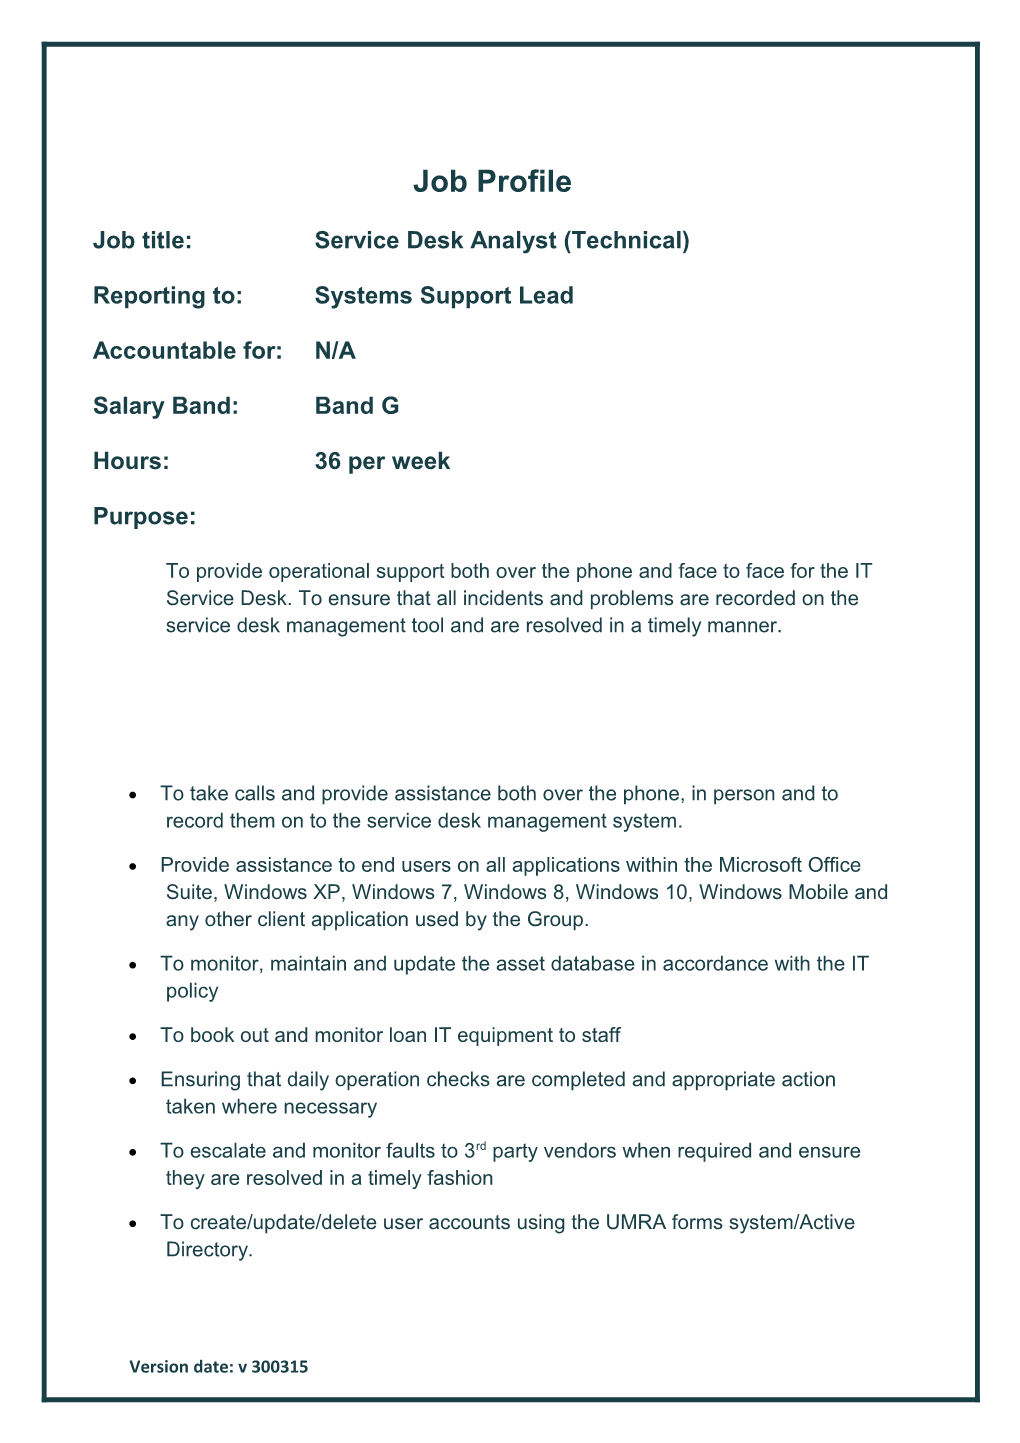 Job Title:Service Desk Analyst (Technical)